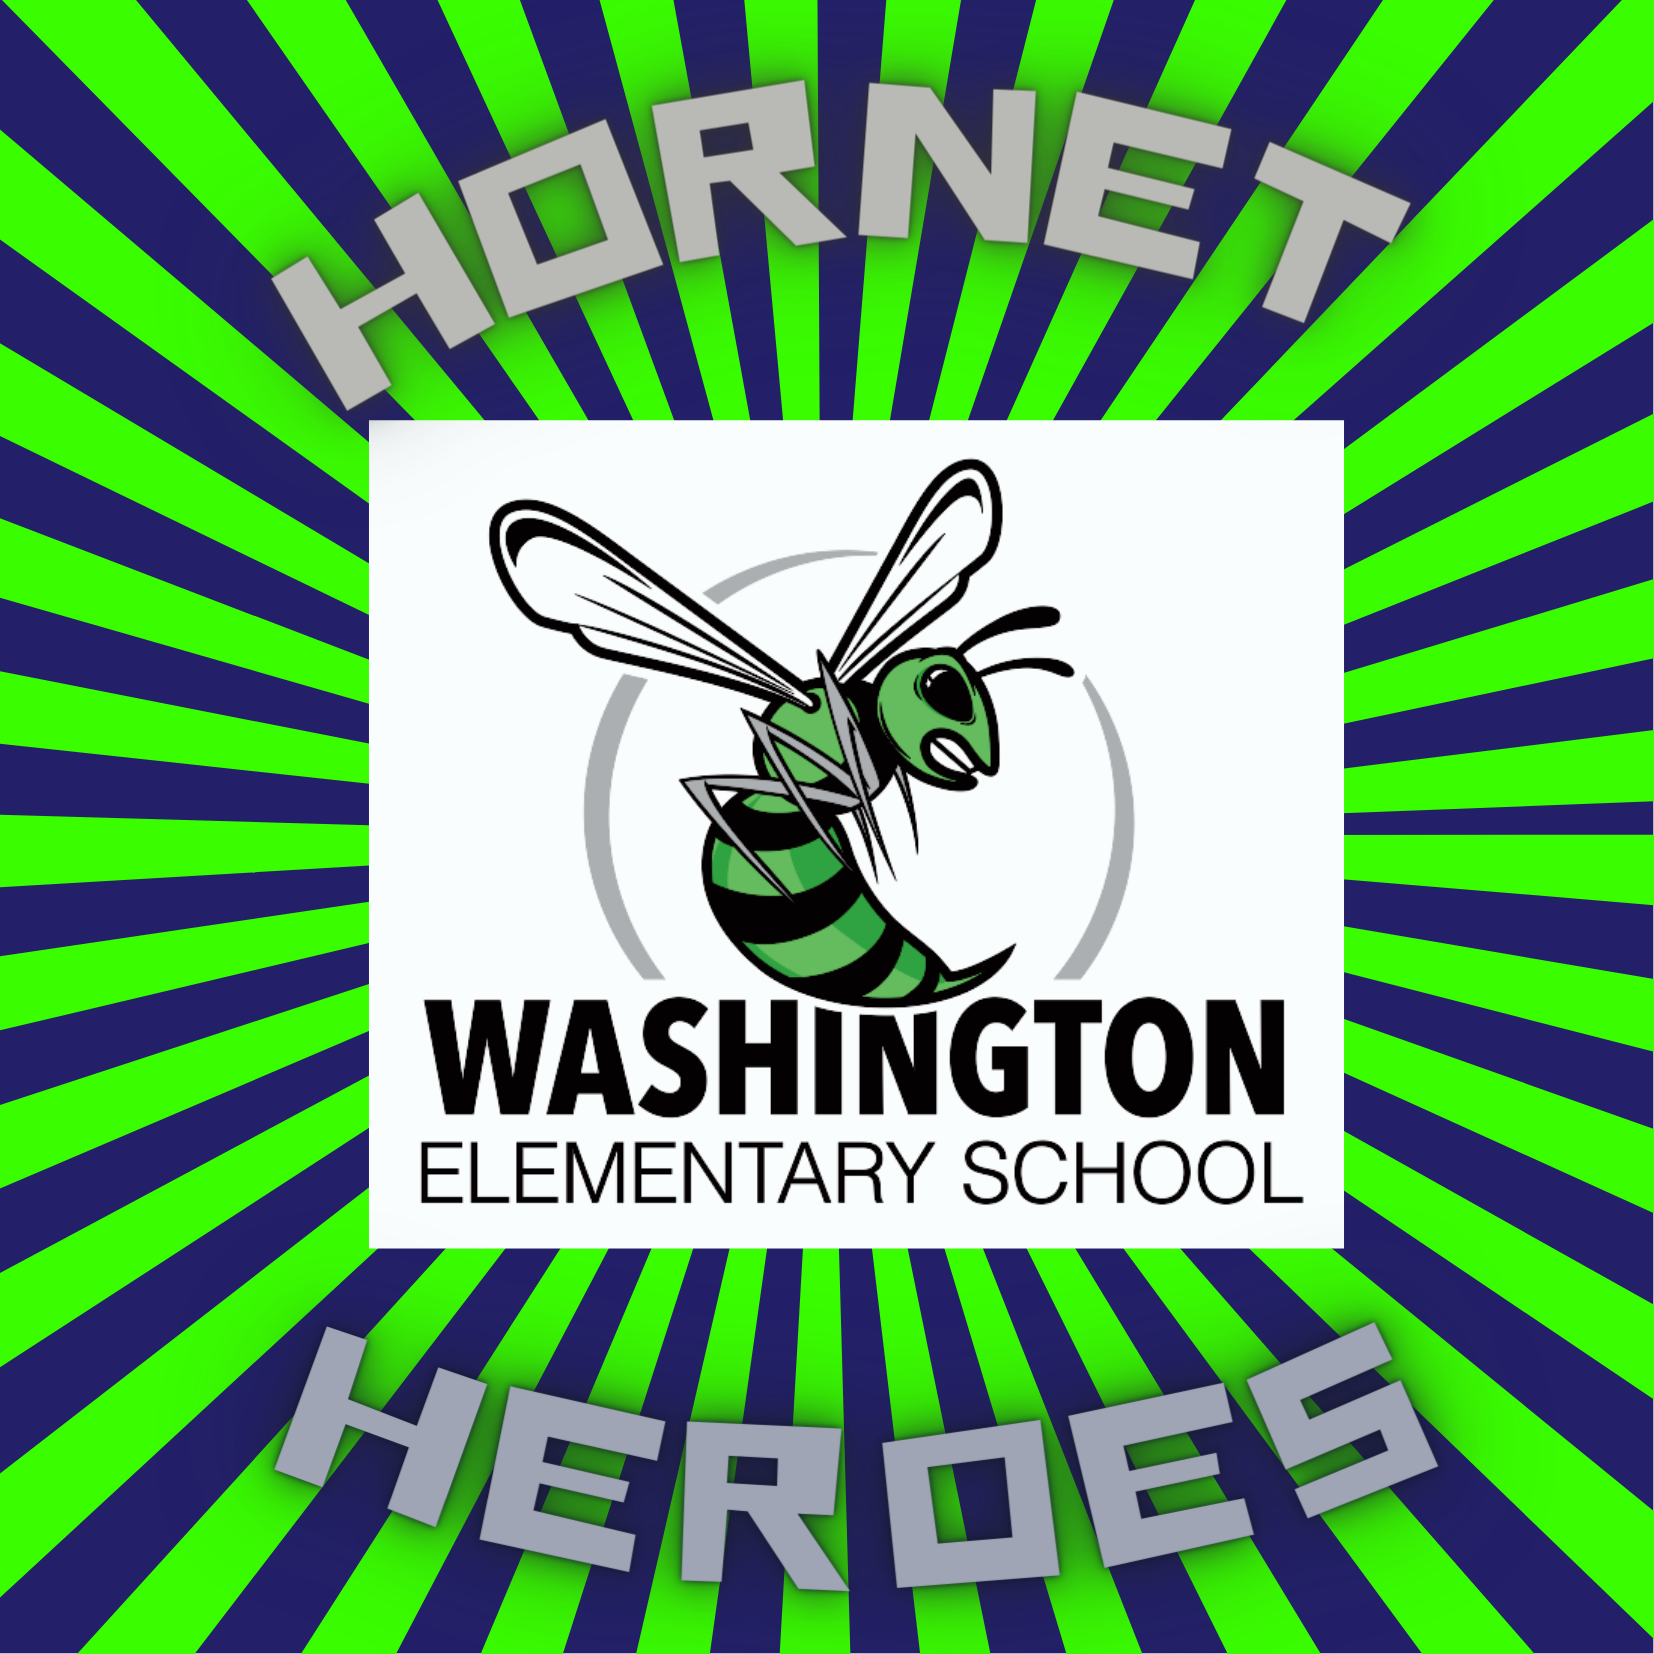 Green hornet logo with text: Washington Elementary School Hornet Heroes